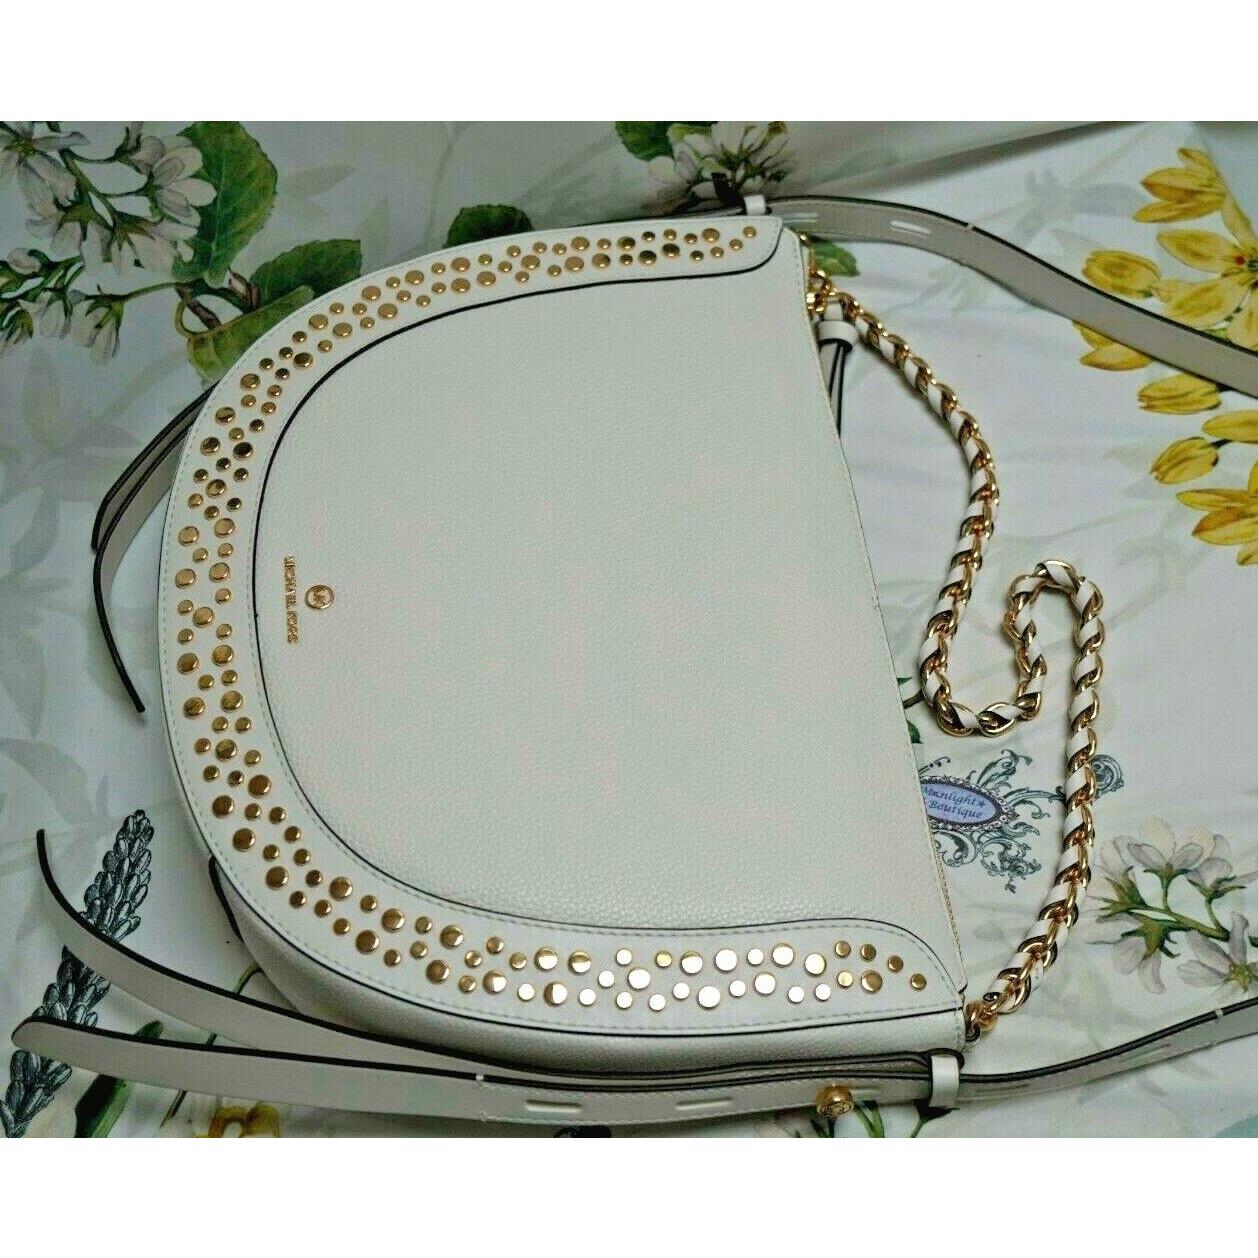 Michael Kors  bag  JAGGER - White / Gold Tone Hardware Exterior, Optic White Manufacturer 4